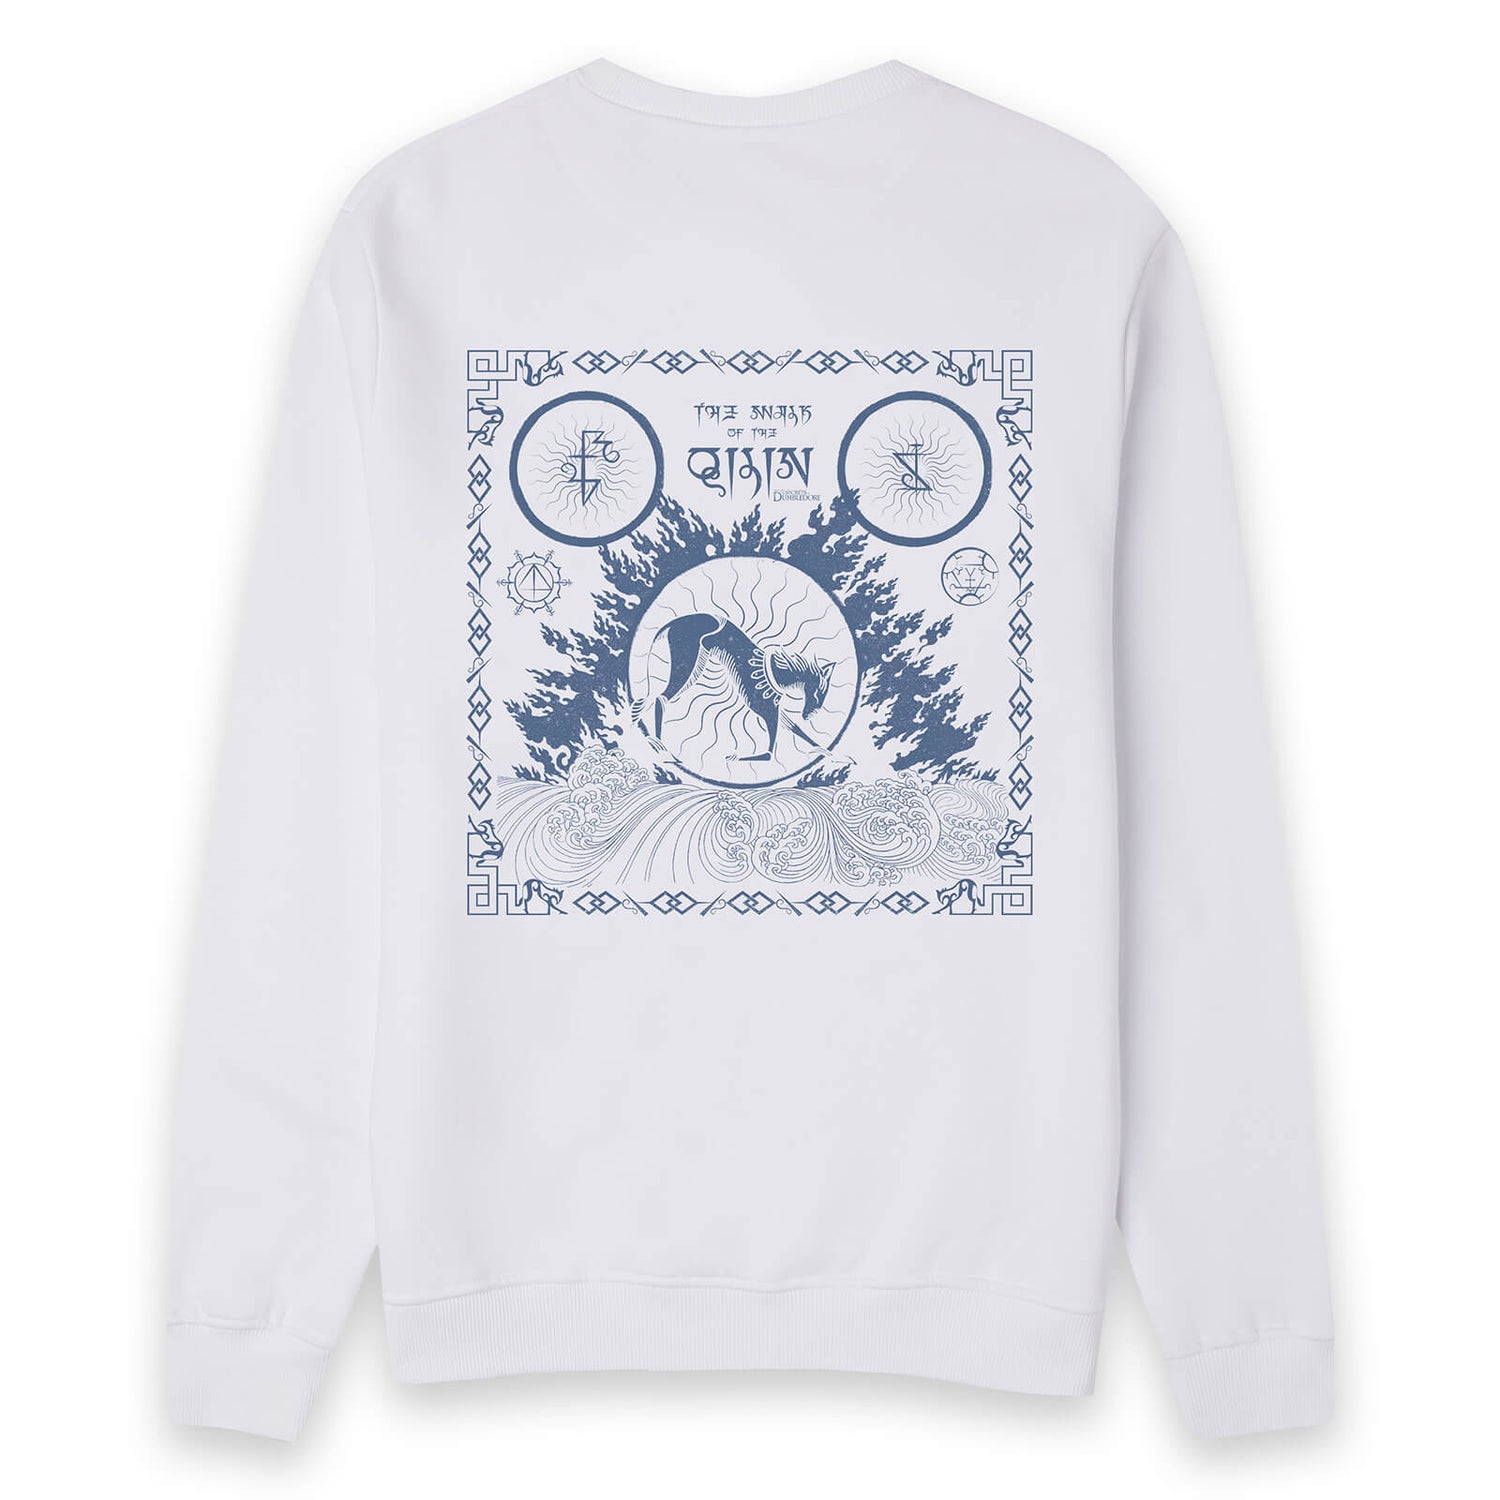 Sweatshirt Motifs Qilin Les Animaux Fantastiques - Blanc